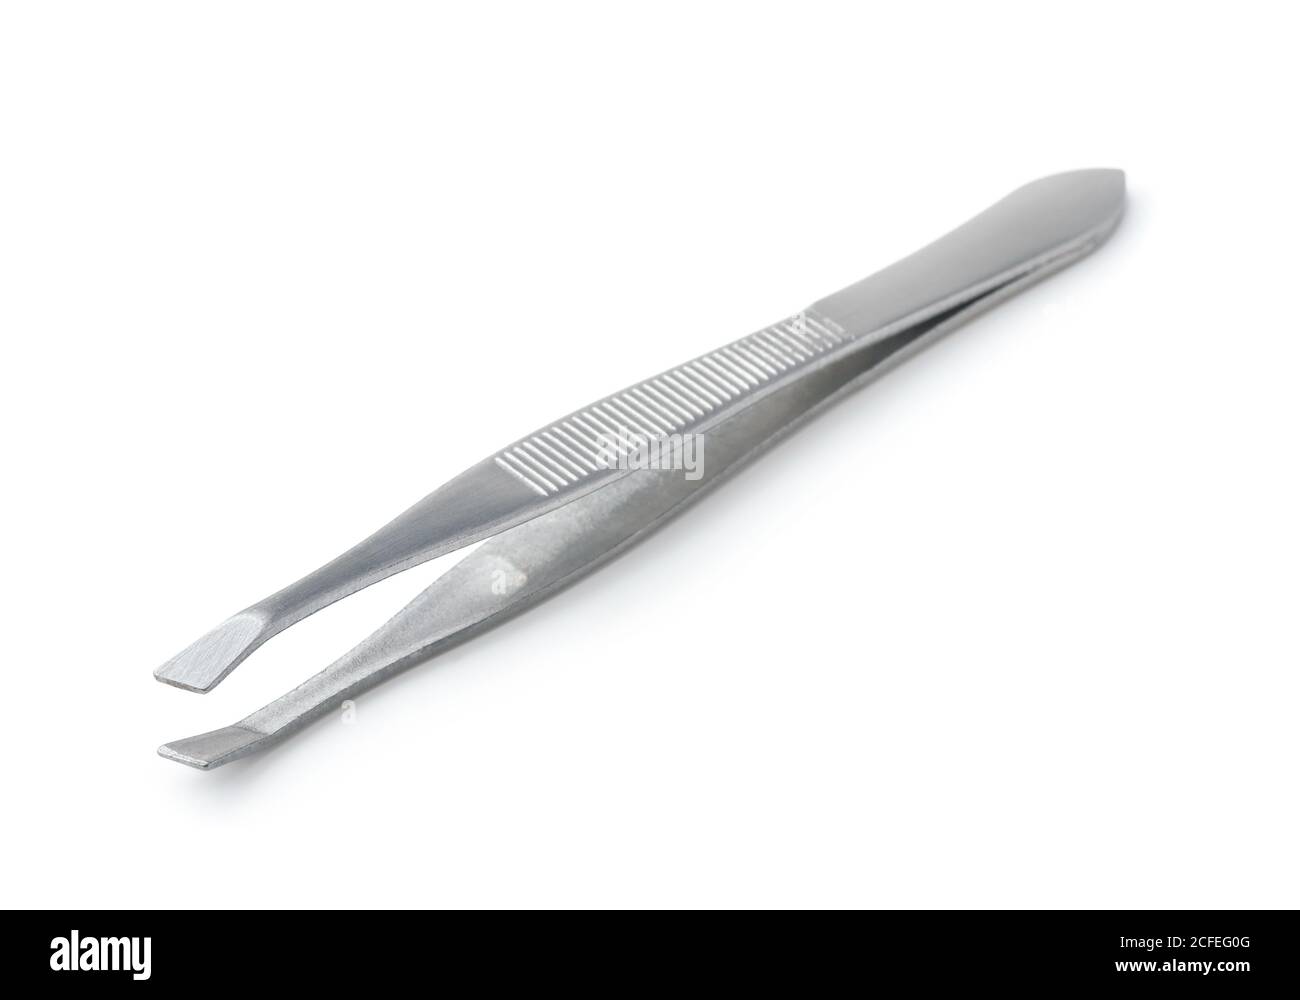 Stainless steel cosmetics tweezers isolated on white Stock Photo